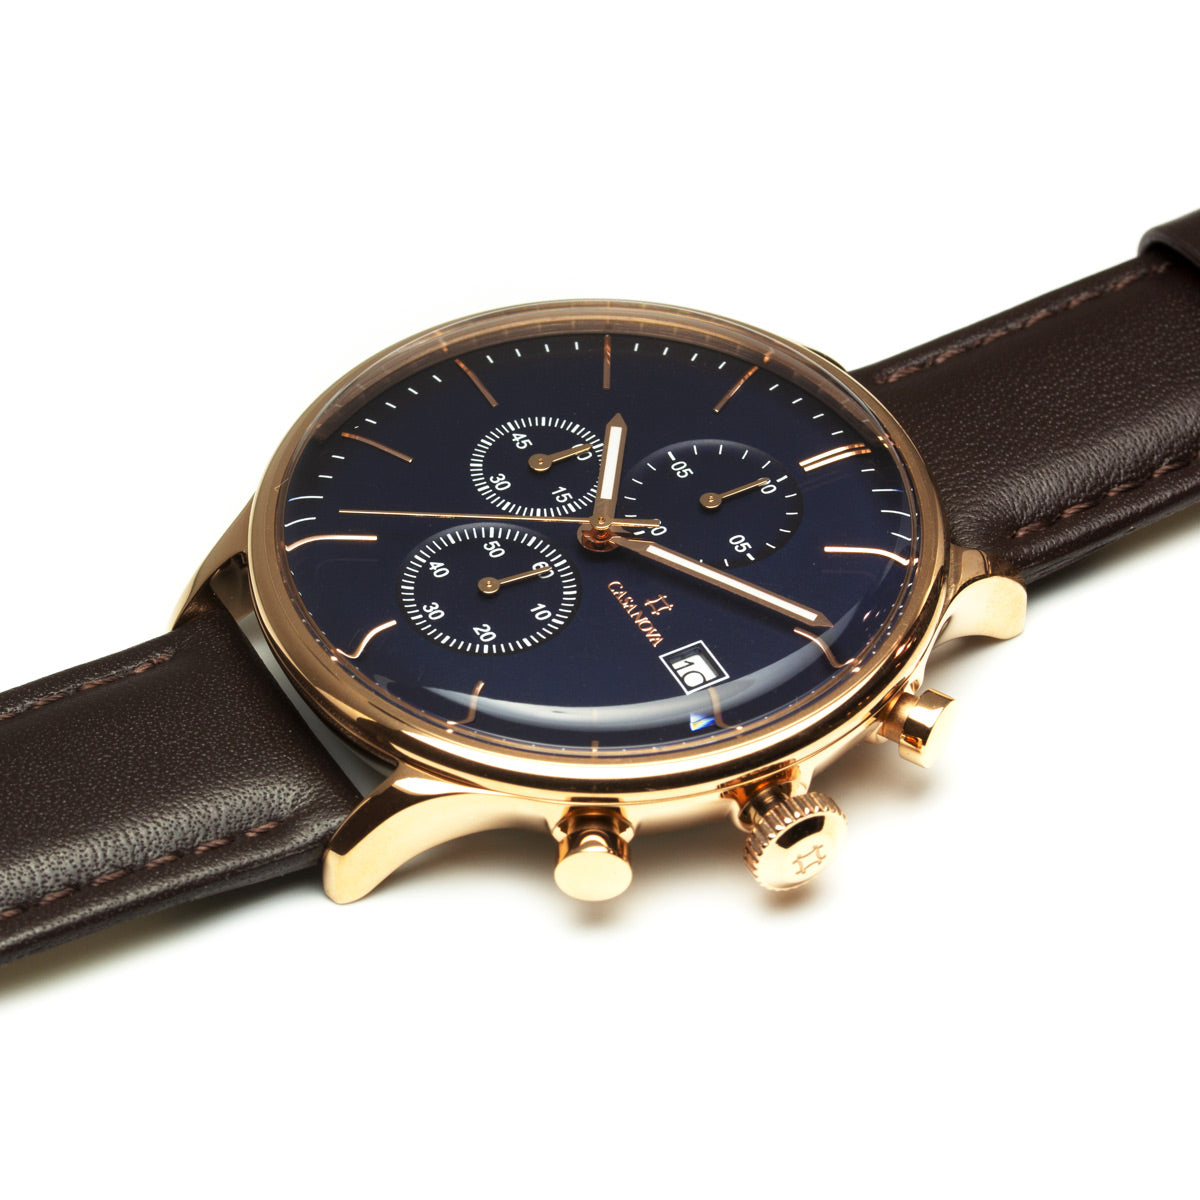 Reloj Elegante Silver Marrón con Dial Azul